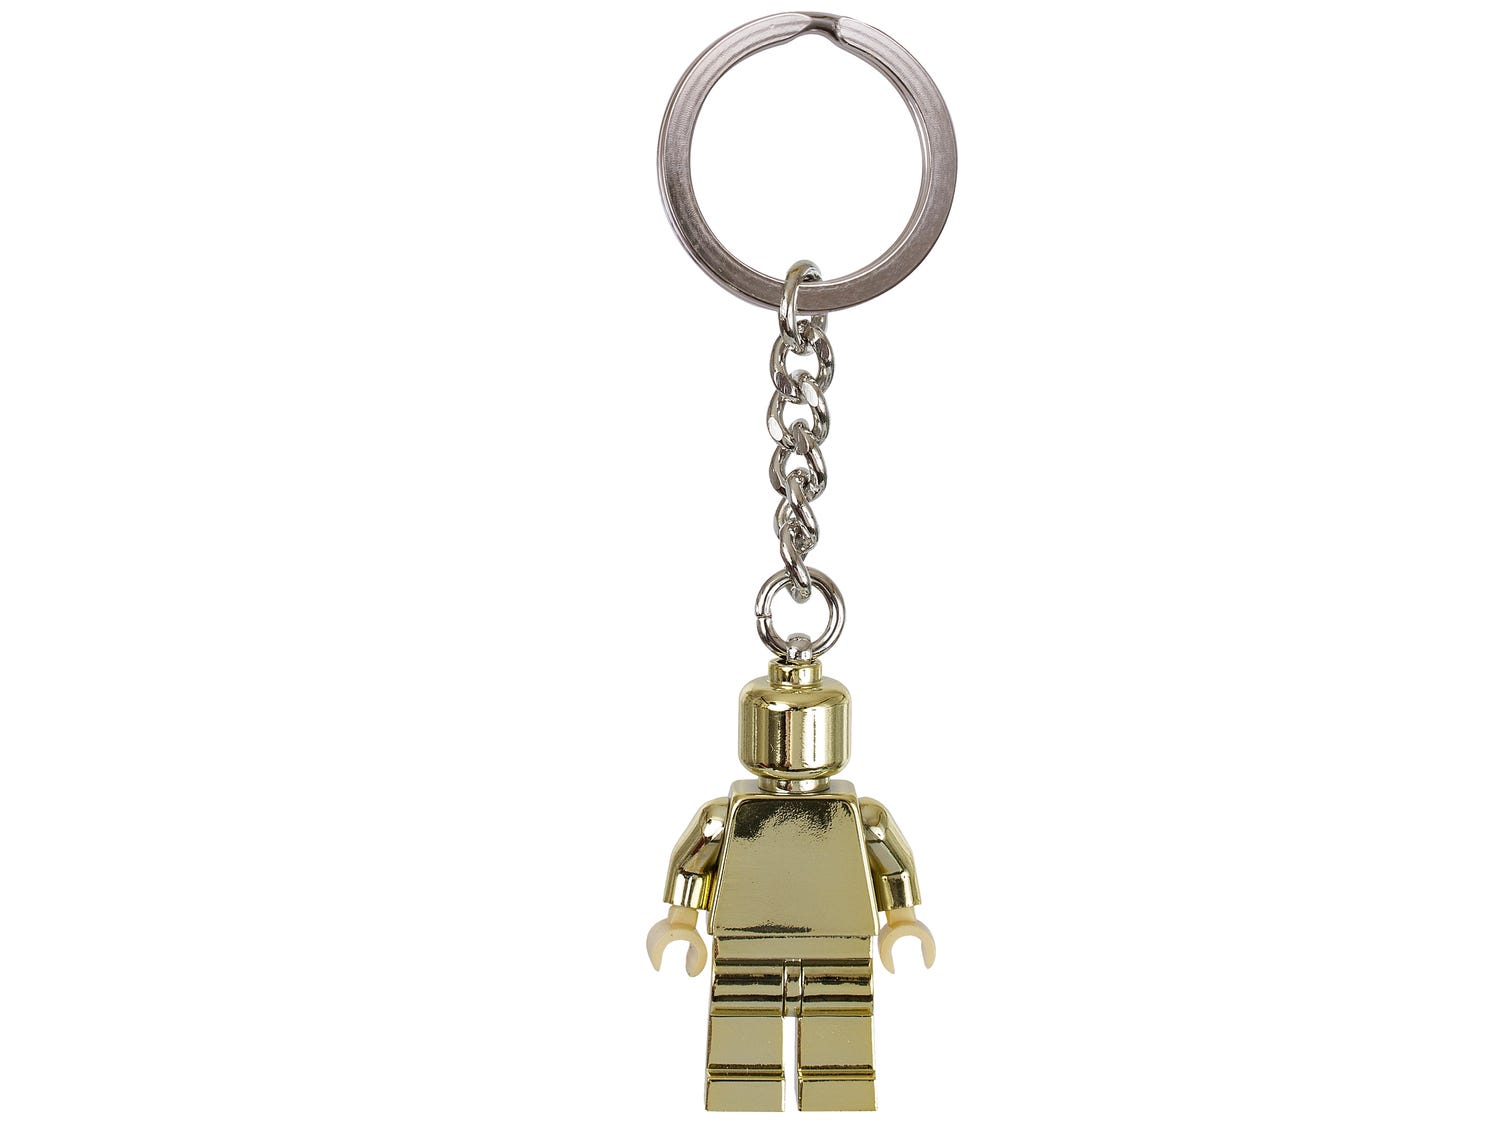 Llavero de minifigura dorada LEGO® 850807, Otros